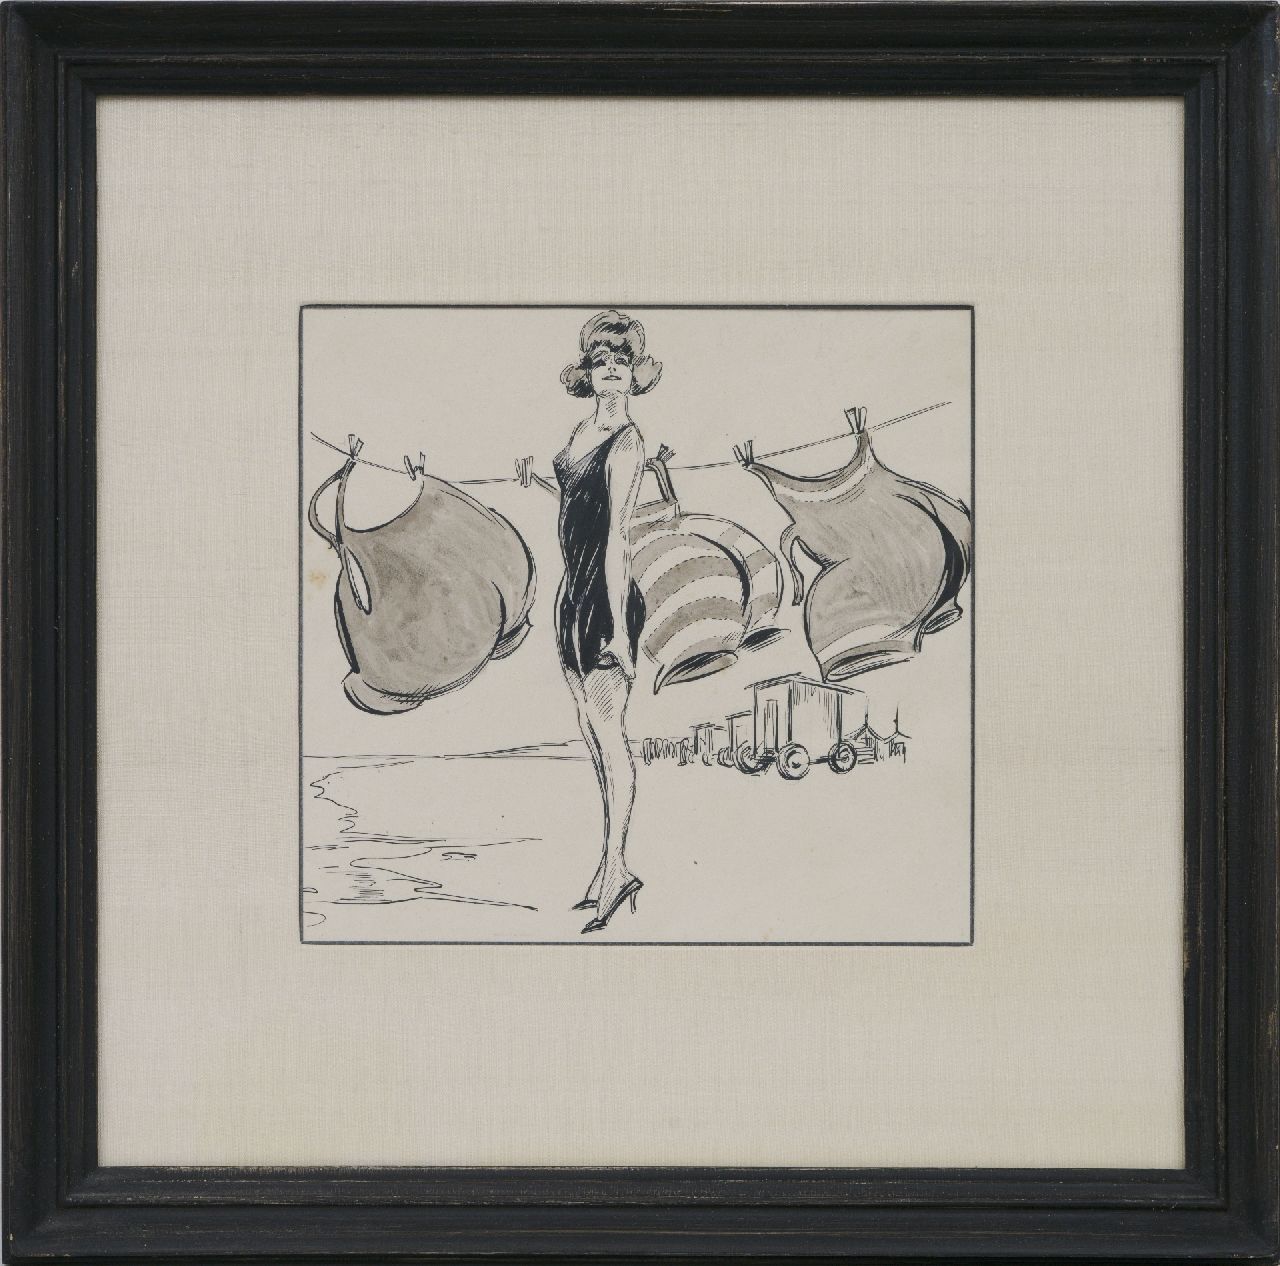 Jung C.H.  | Carel Hendrik 'Carlo' Jung, Frechdachs, Ausziehtusche auf Papier 25,0 x 23,0 cm